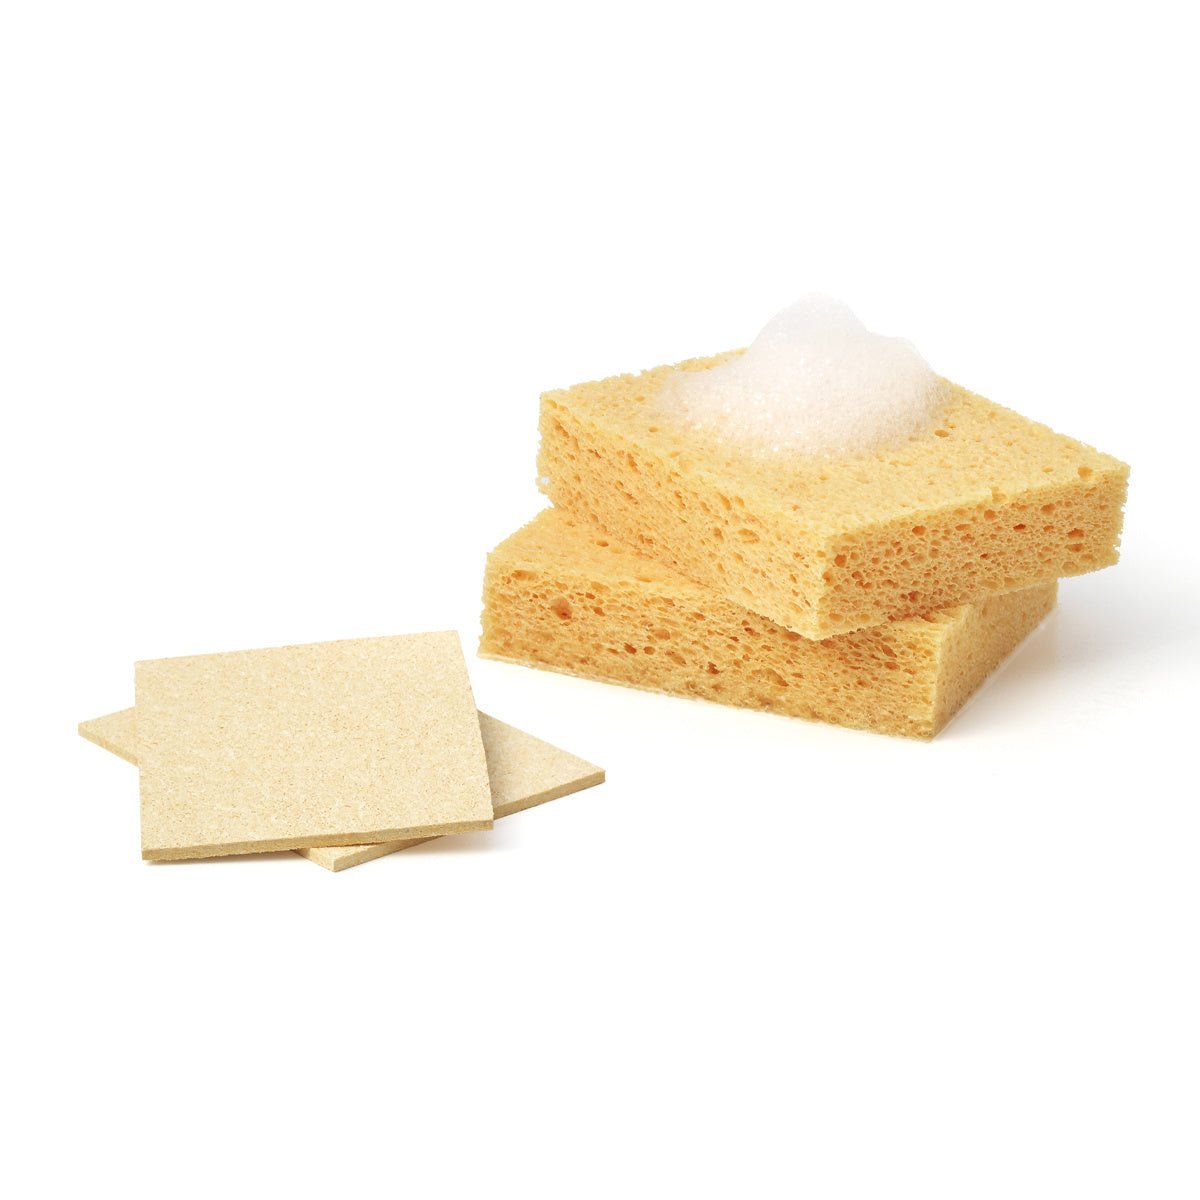 Walnut Scrubber Sponge 2-Pack - What's Good